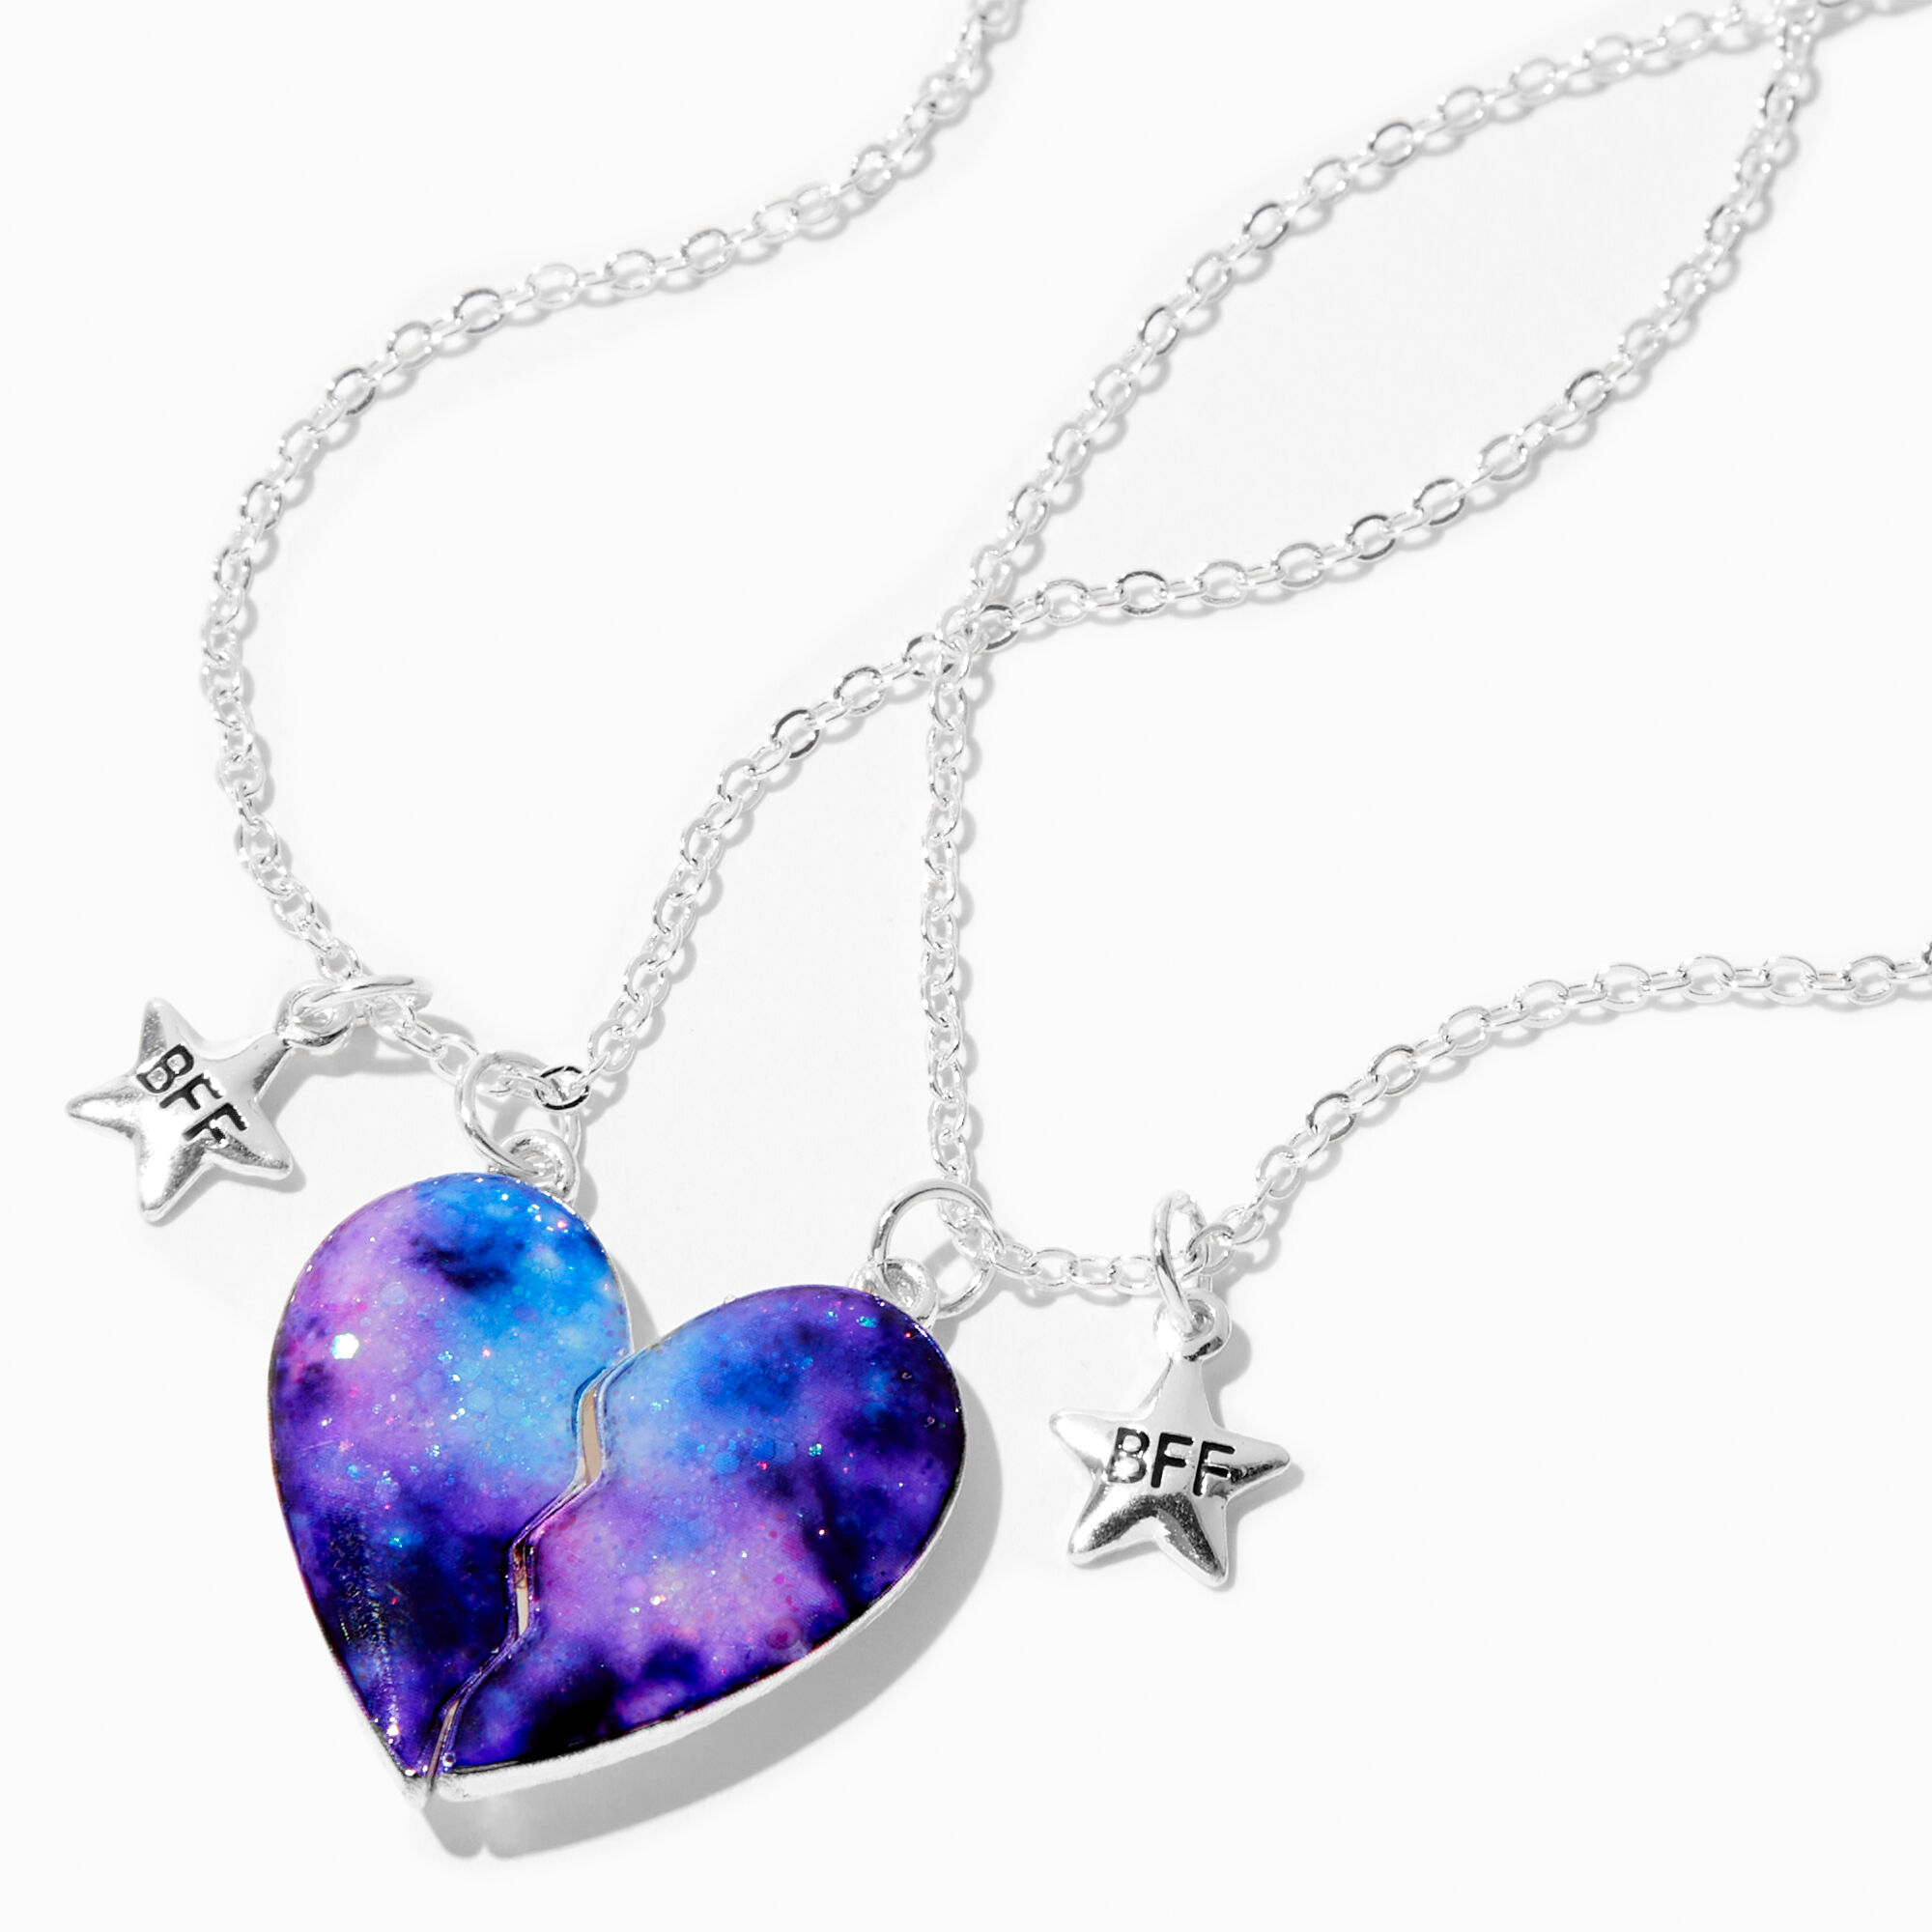 Details about   Claire’s Mood Color Changing Unicorn Bff Best Friend Bracelet Jewelry 